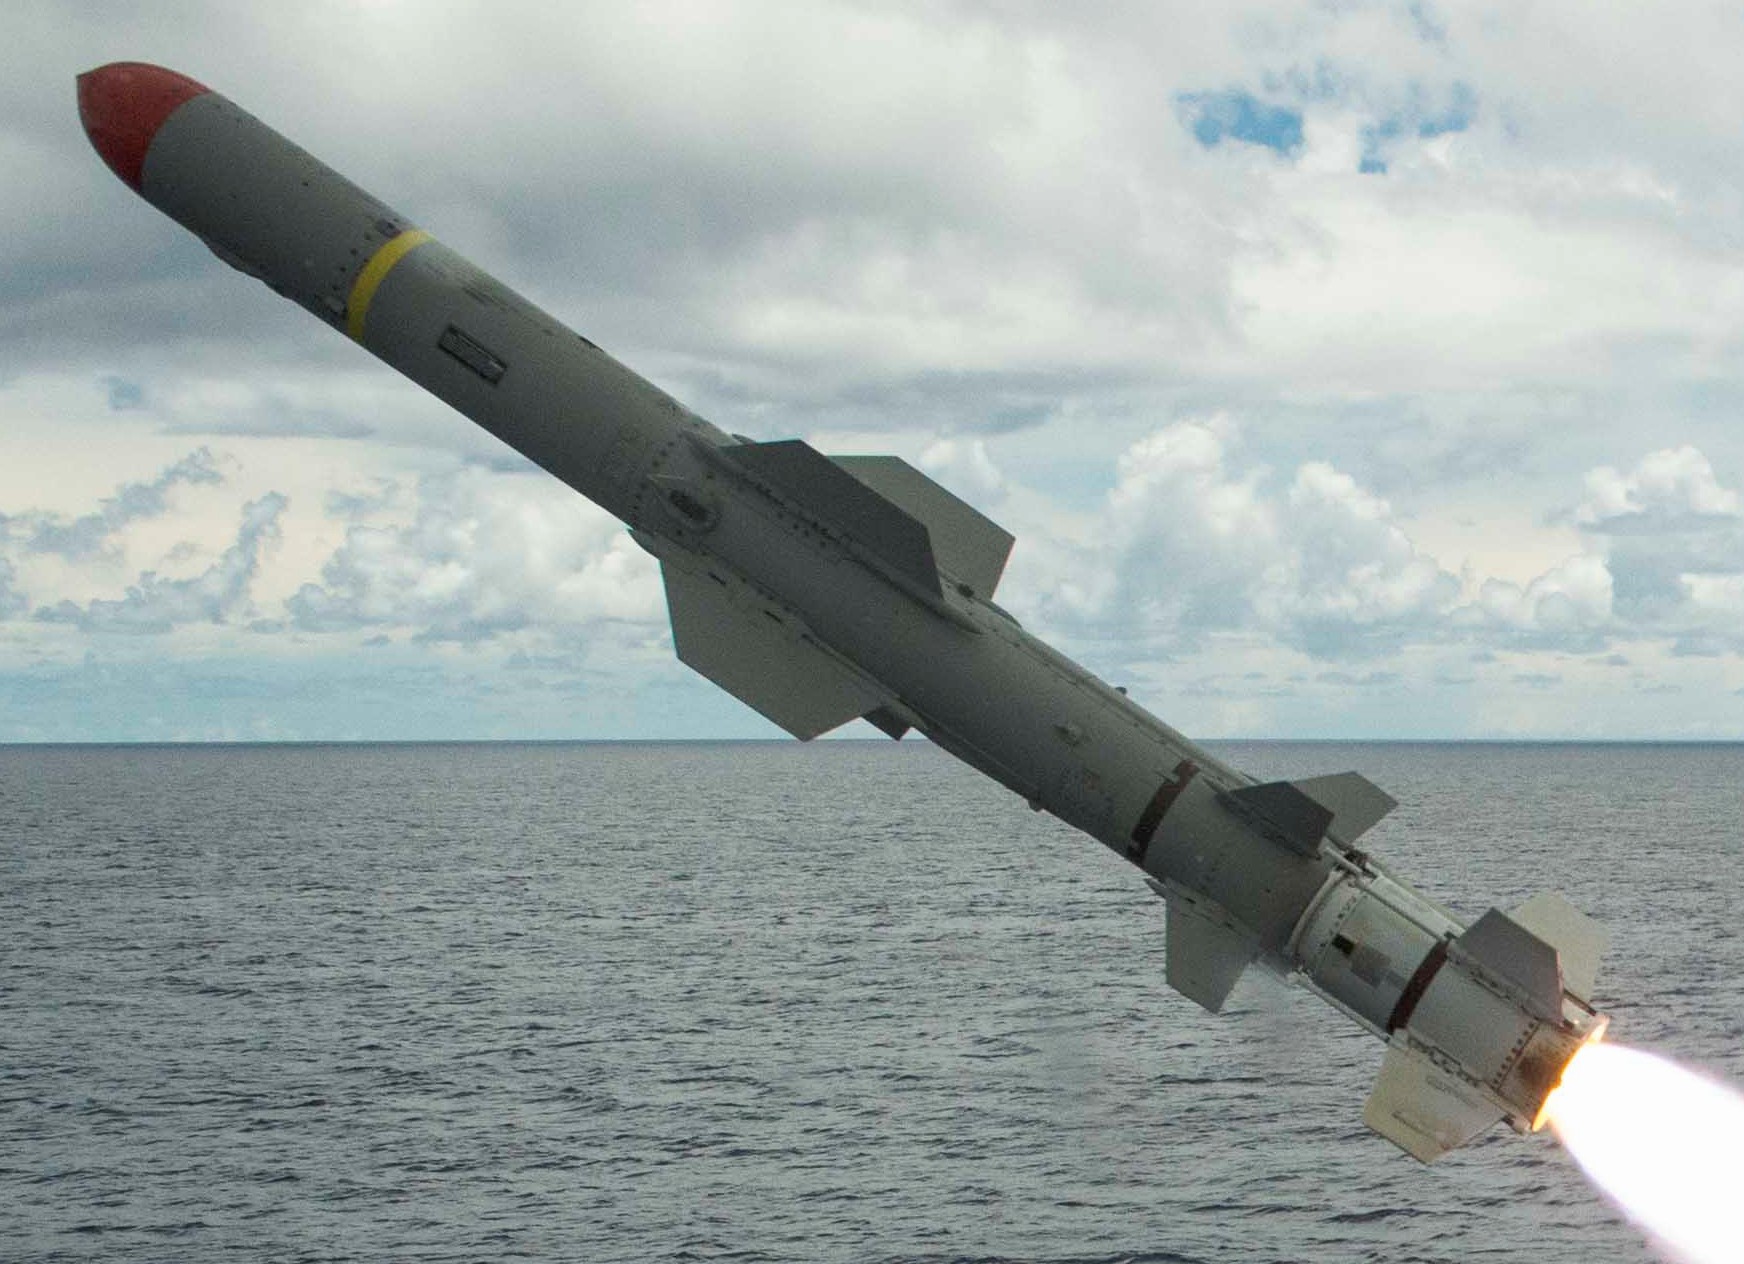 rgm-84 harpoon ssm anti ship missile mk-141 missile launcher 52